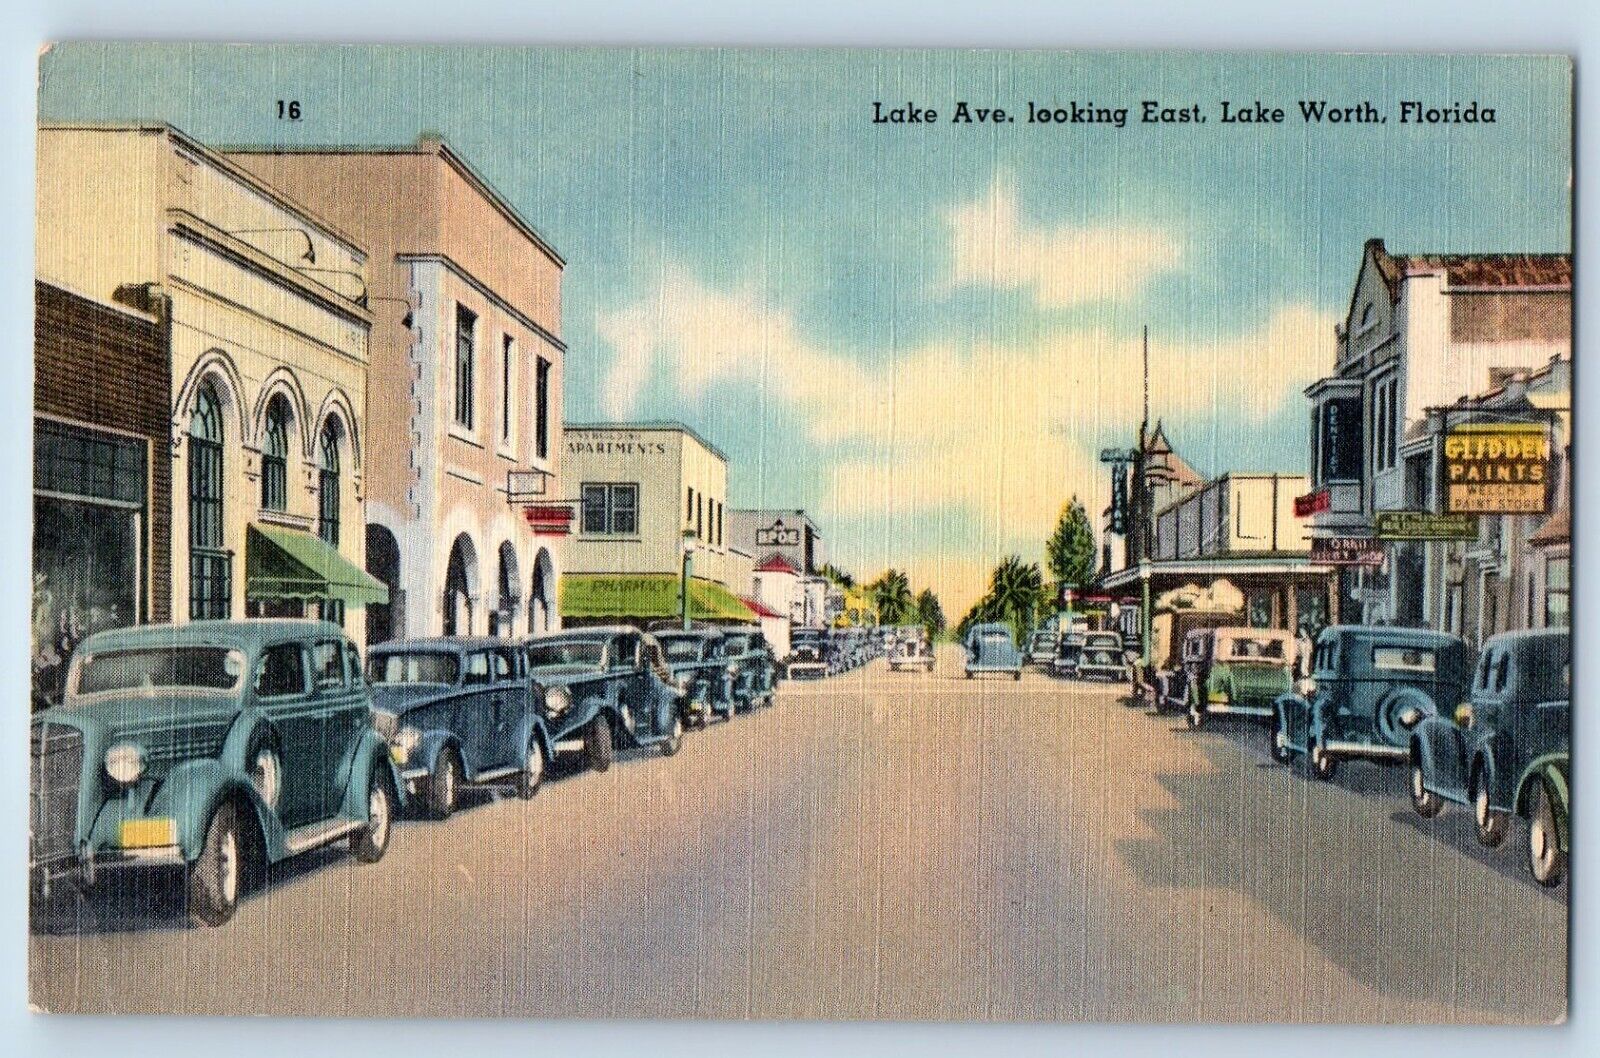 Lake Worth Florida Postcard Lake Ave. Looking East Classic Cars Exterior c1940